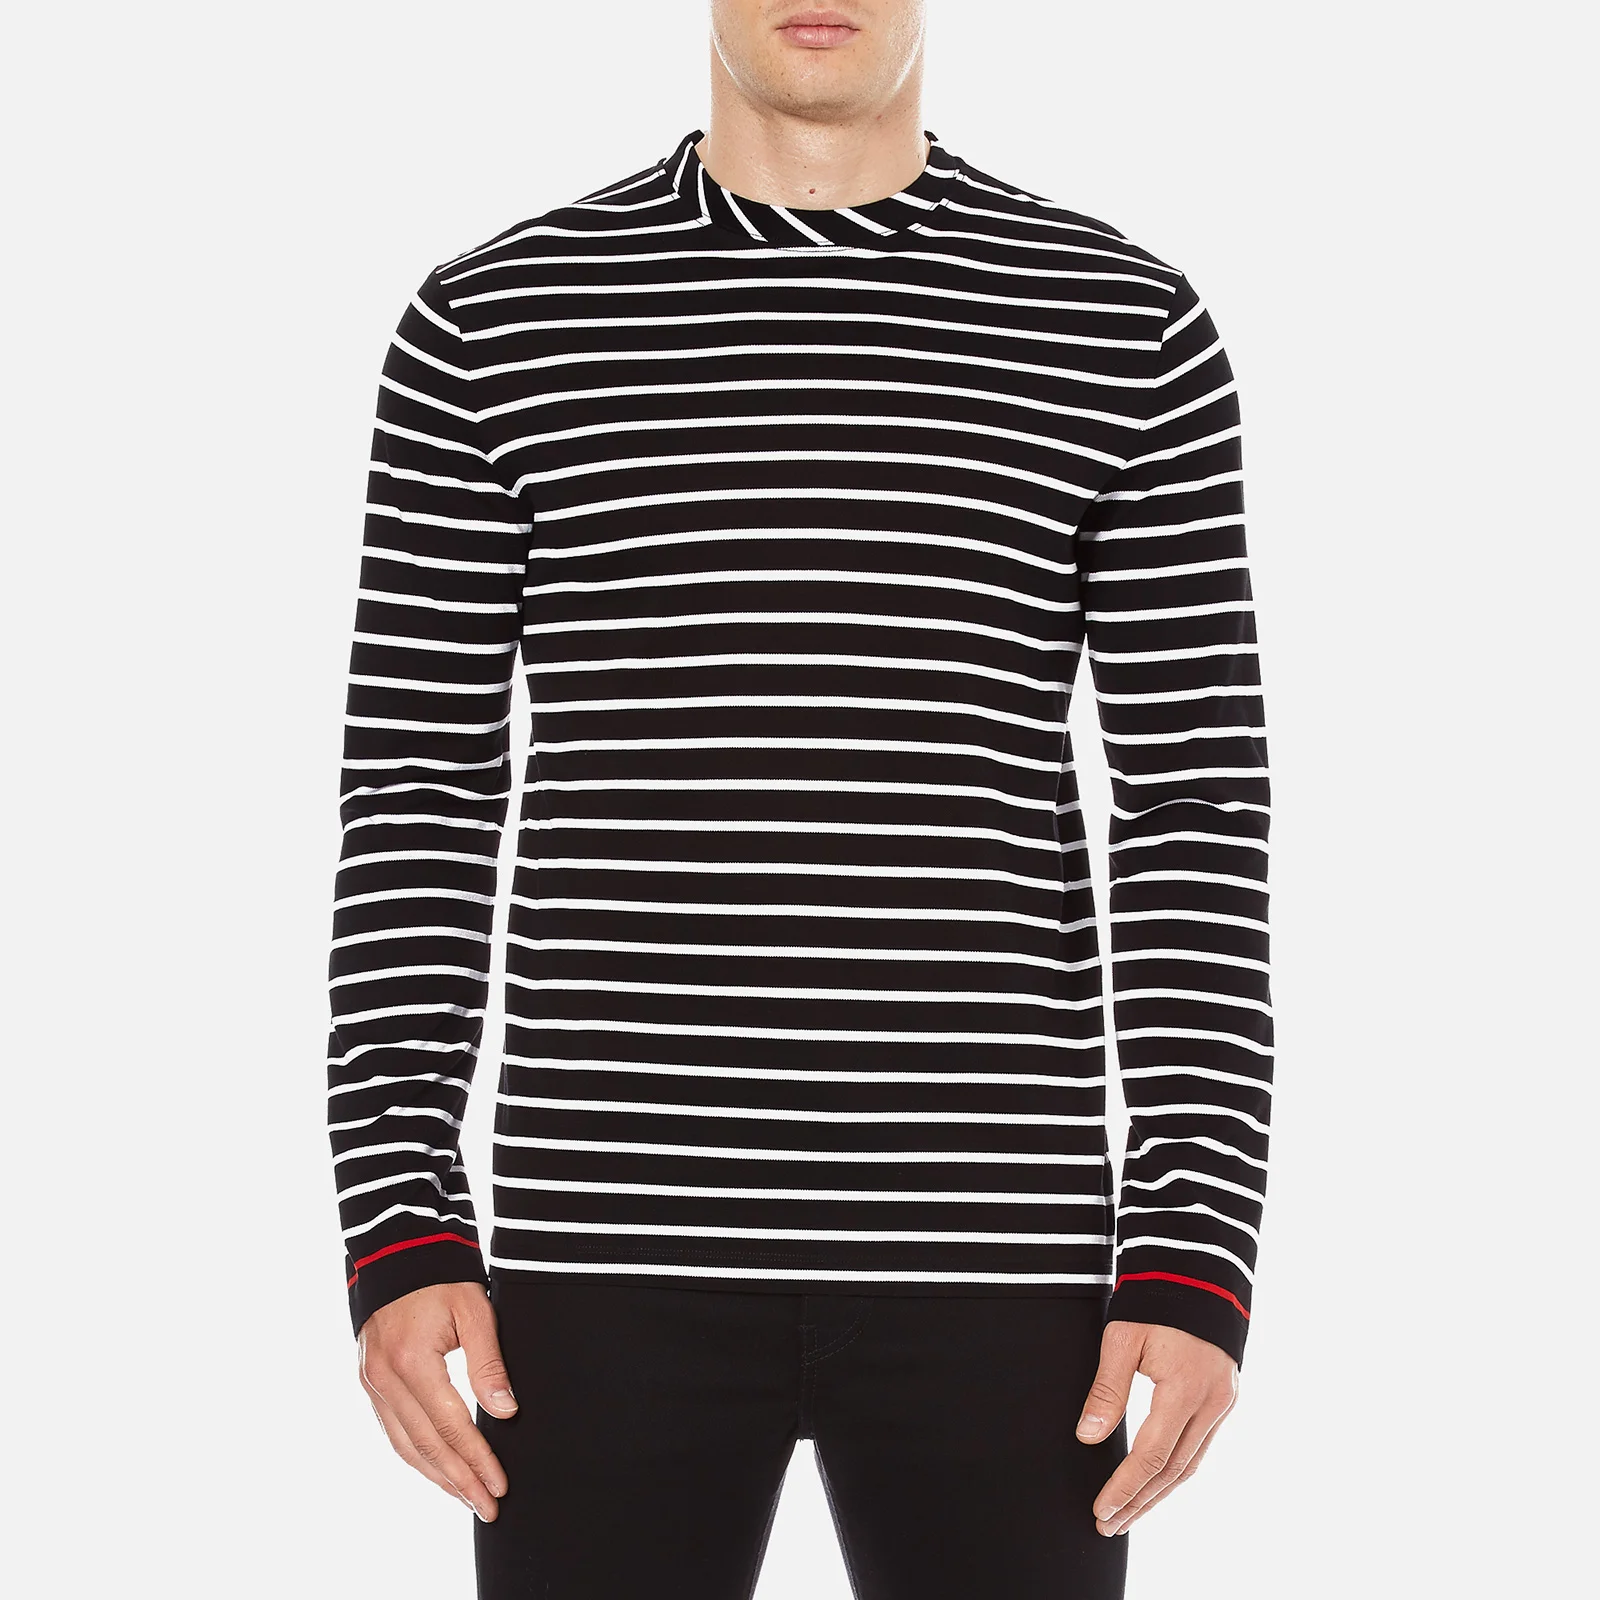 McQ Alexander McQueen Men's Long Sleeve Crew Stripe T-Shirt - Stripe White/Black Image 1